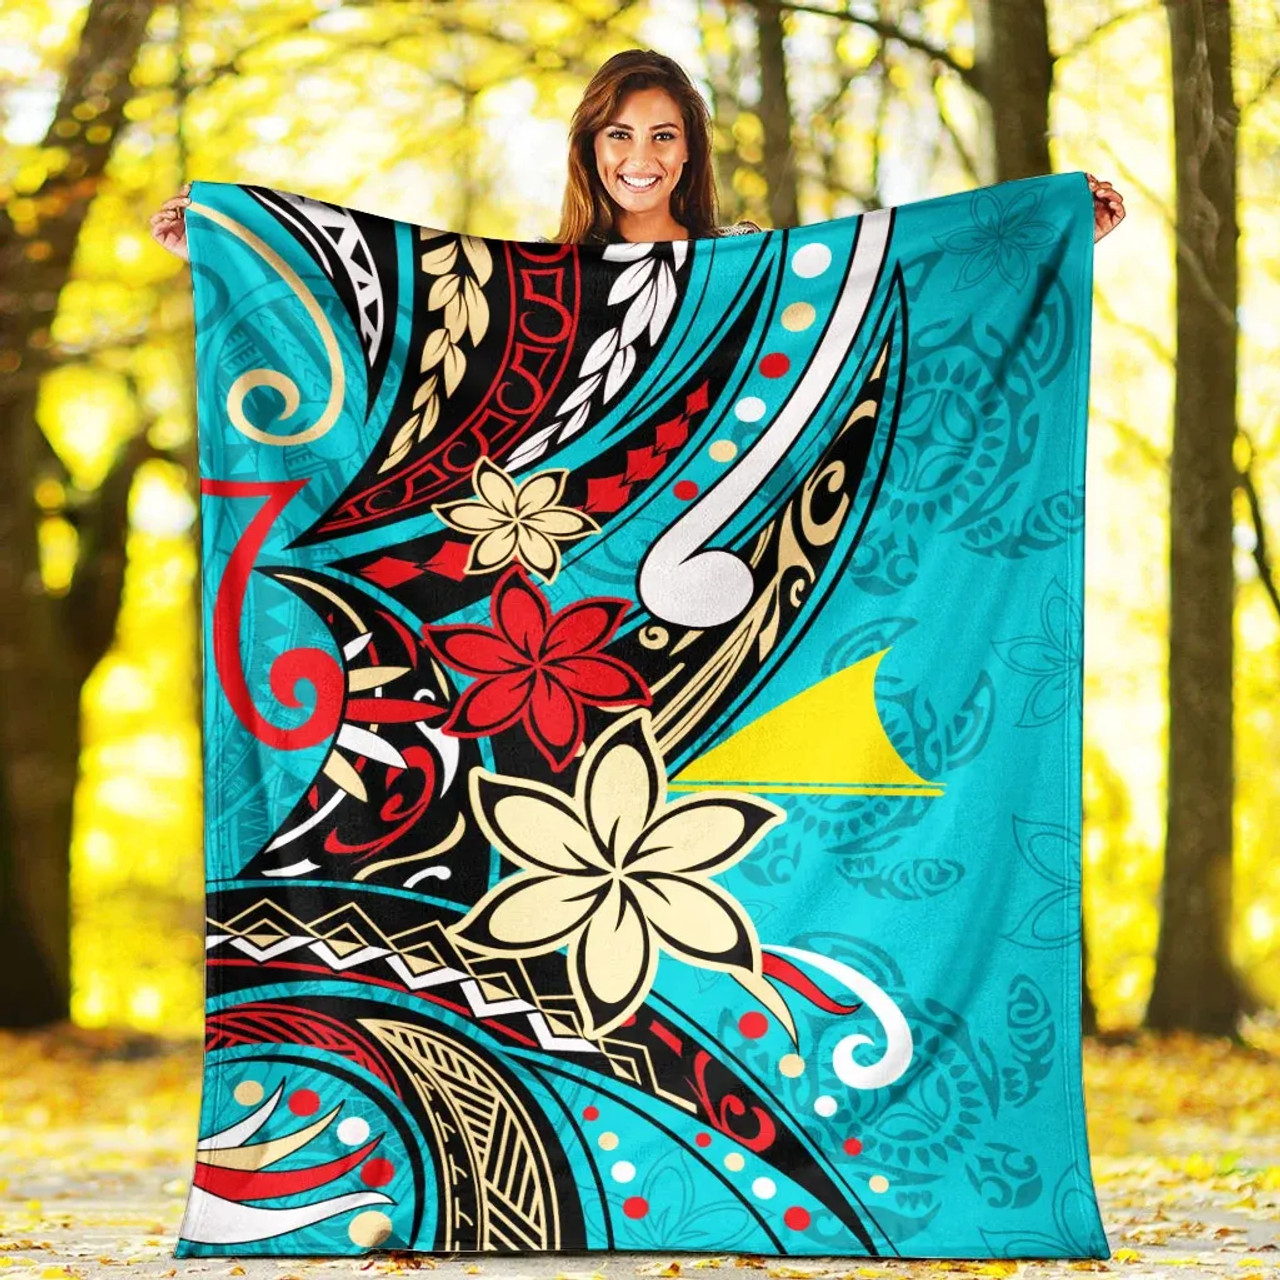 Tokelau Premium Blanket - Tribal Flower With Special Turtles Blue Color 5